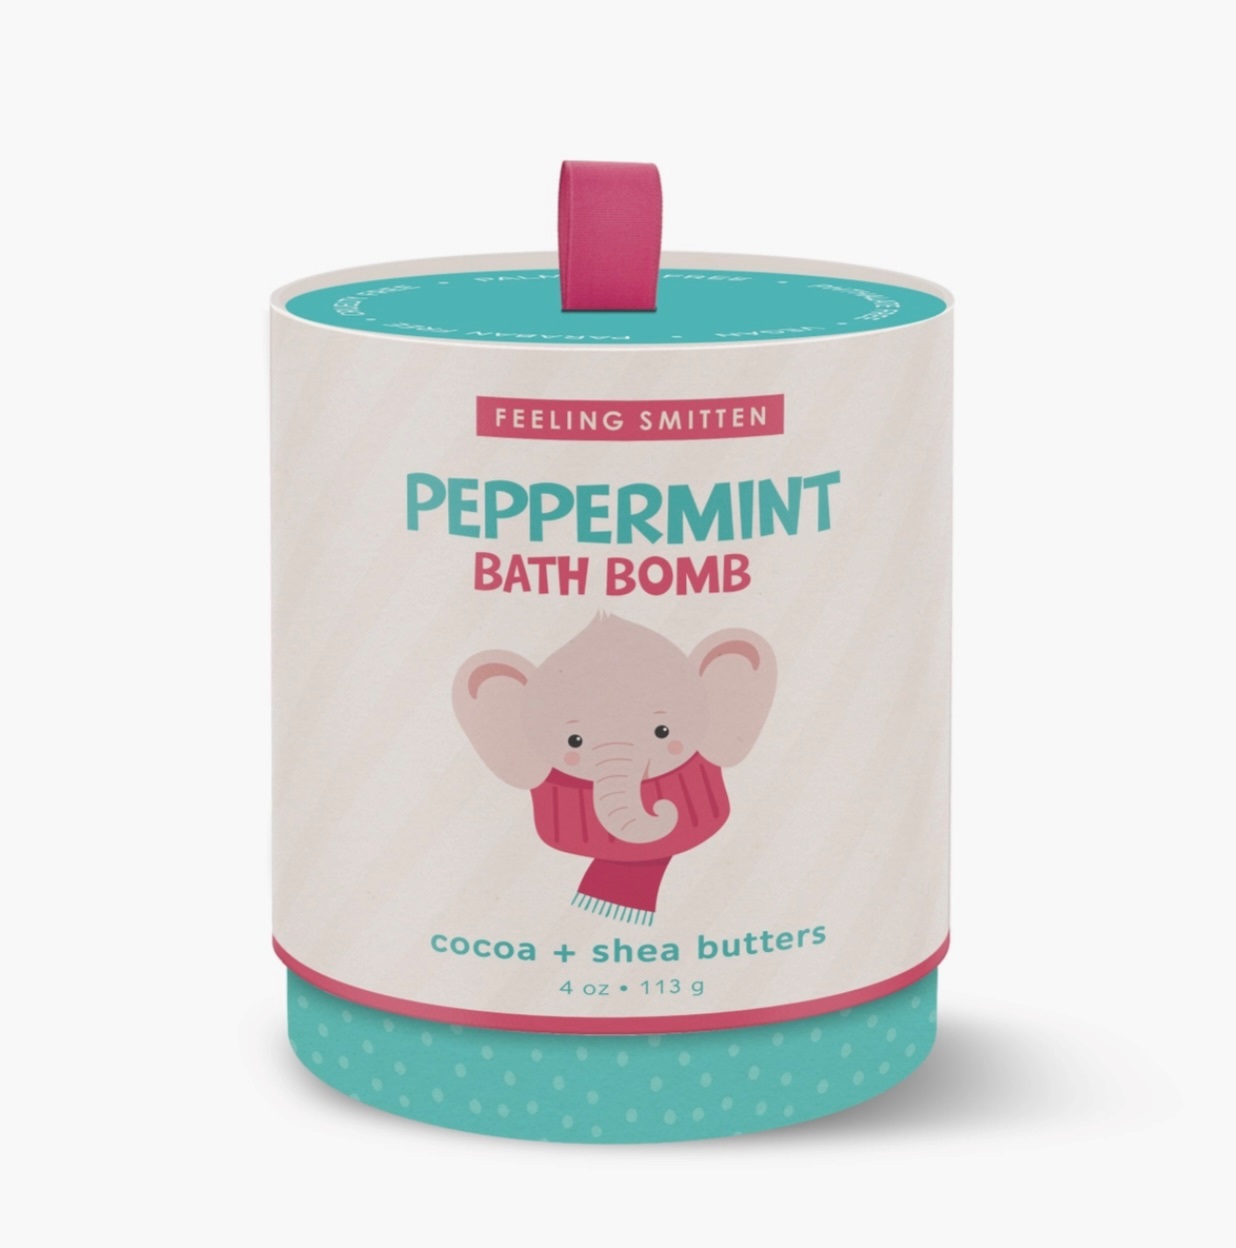 Peppermint bath bomb ornament